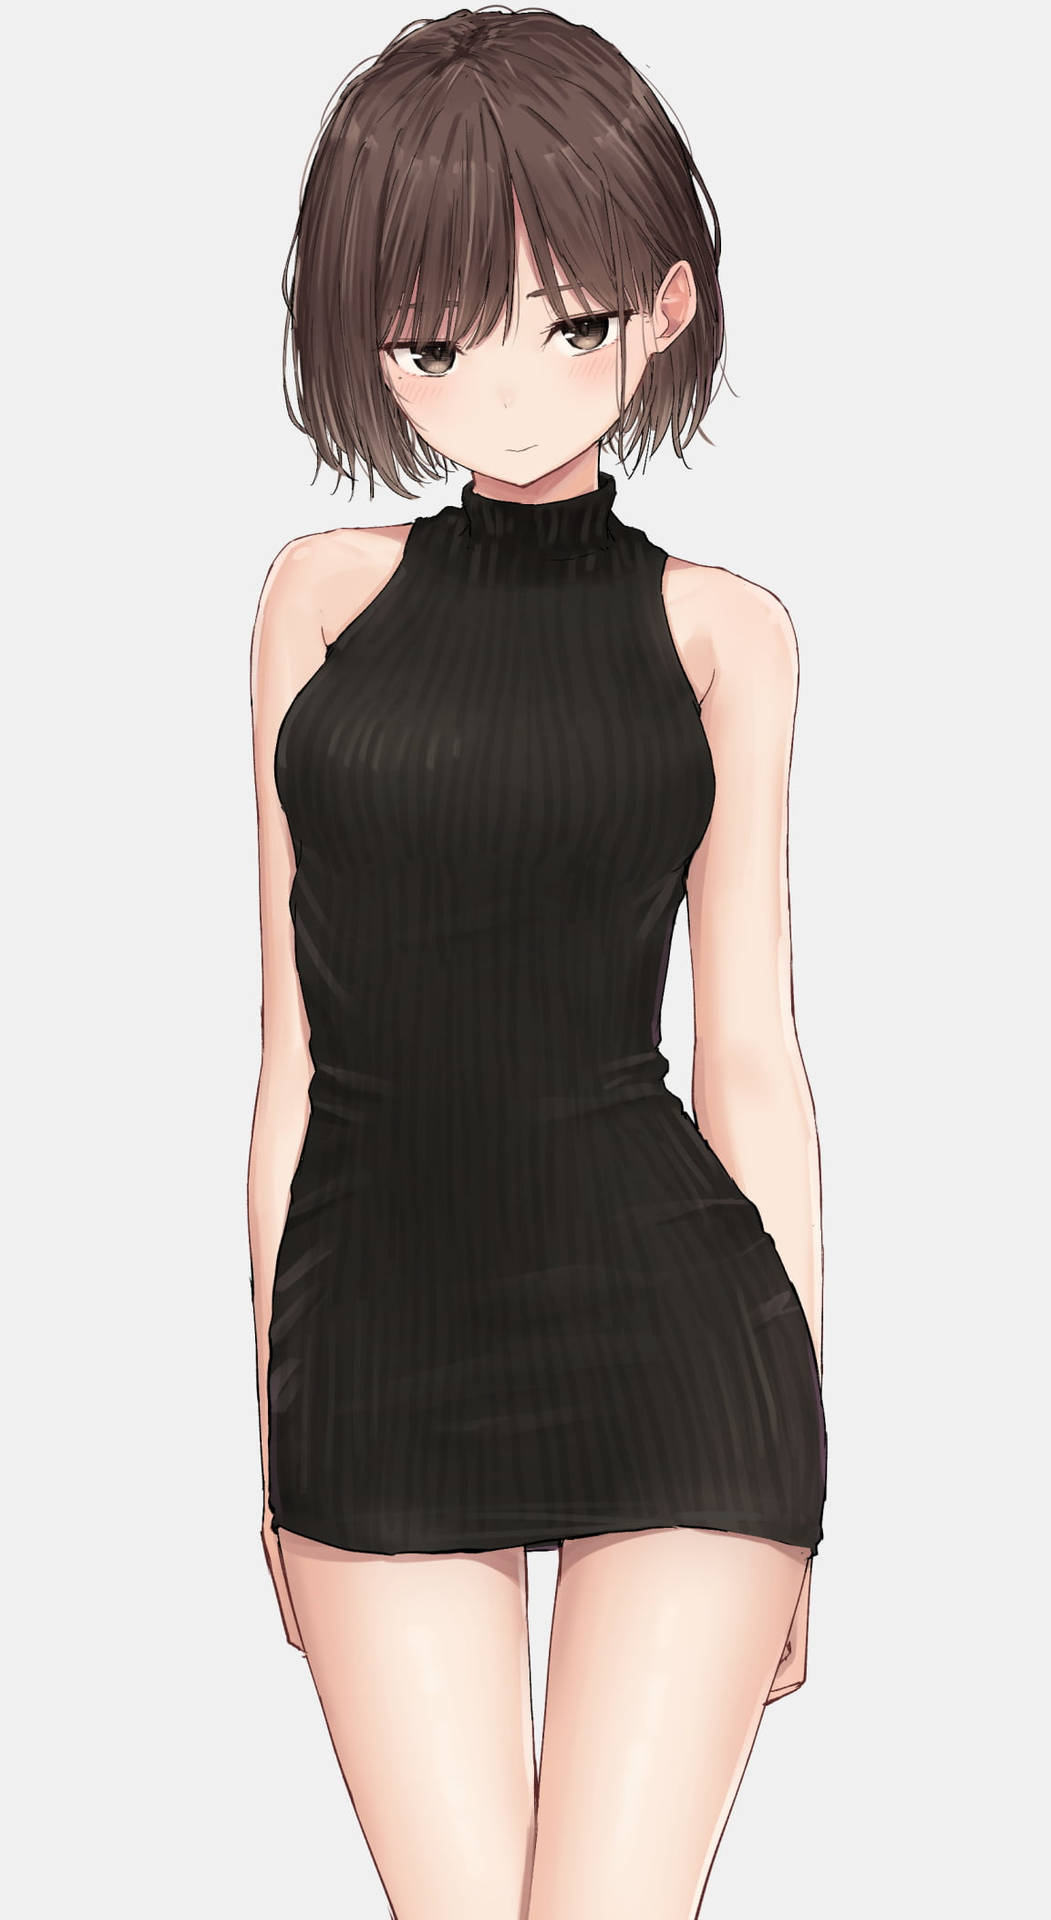 Aesthetic Anime Girl In Sexy Black